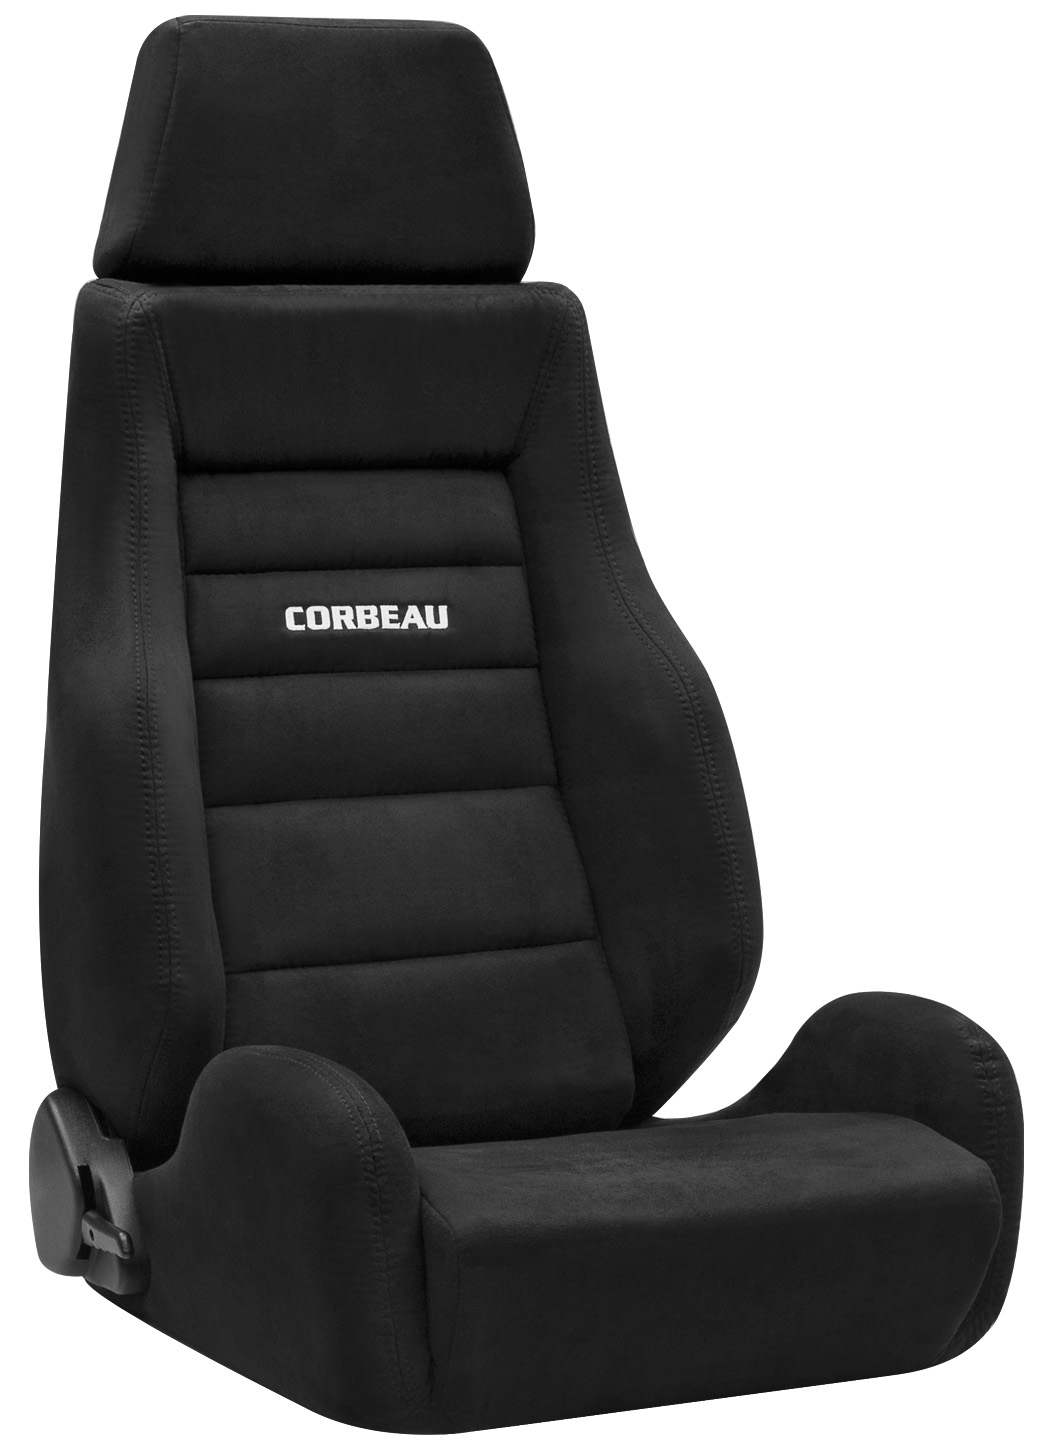 Corbeau GTSII Racing Seat, Black Leather / Microsuede, LS20301PR